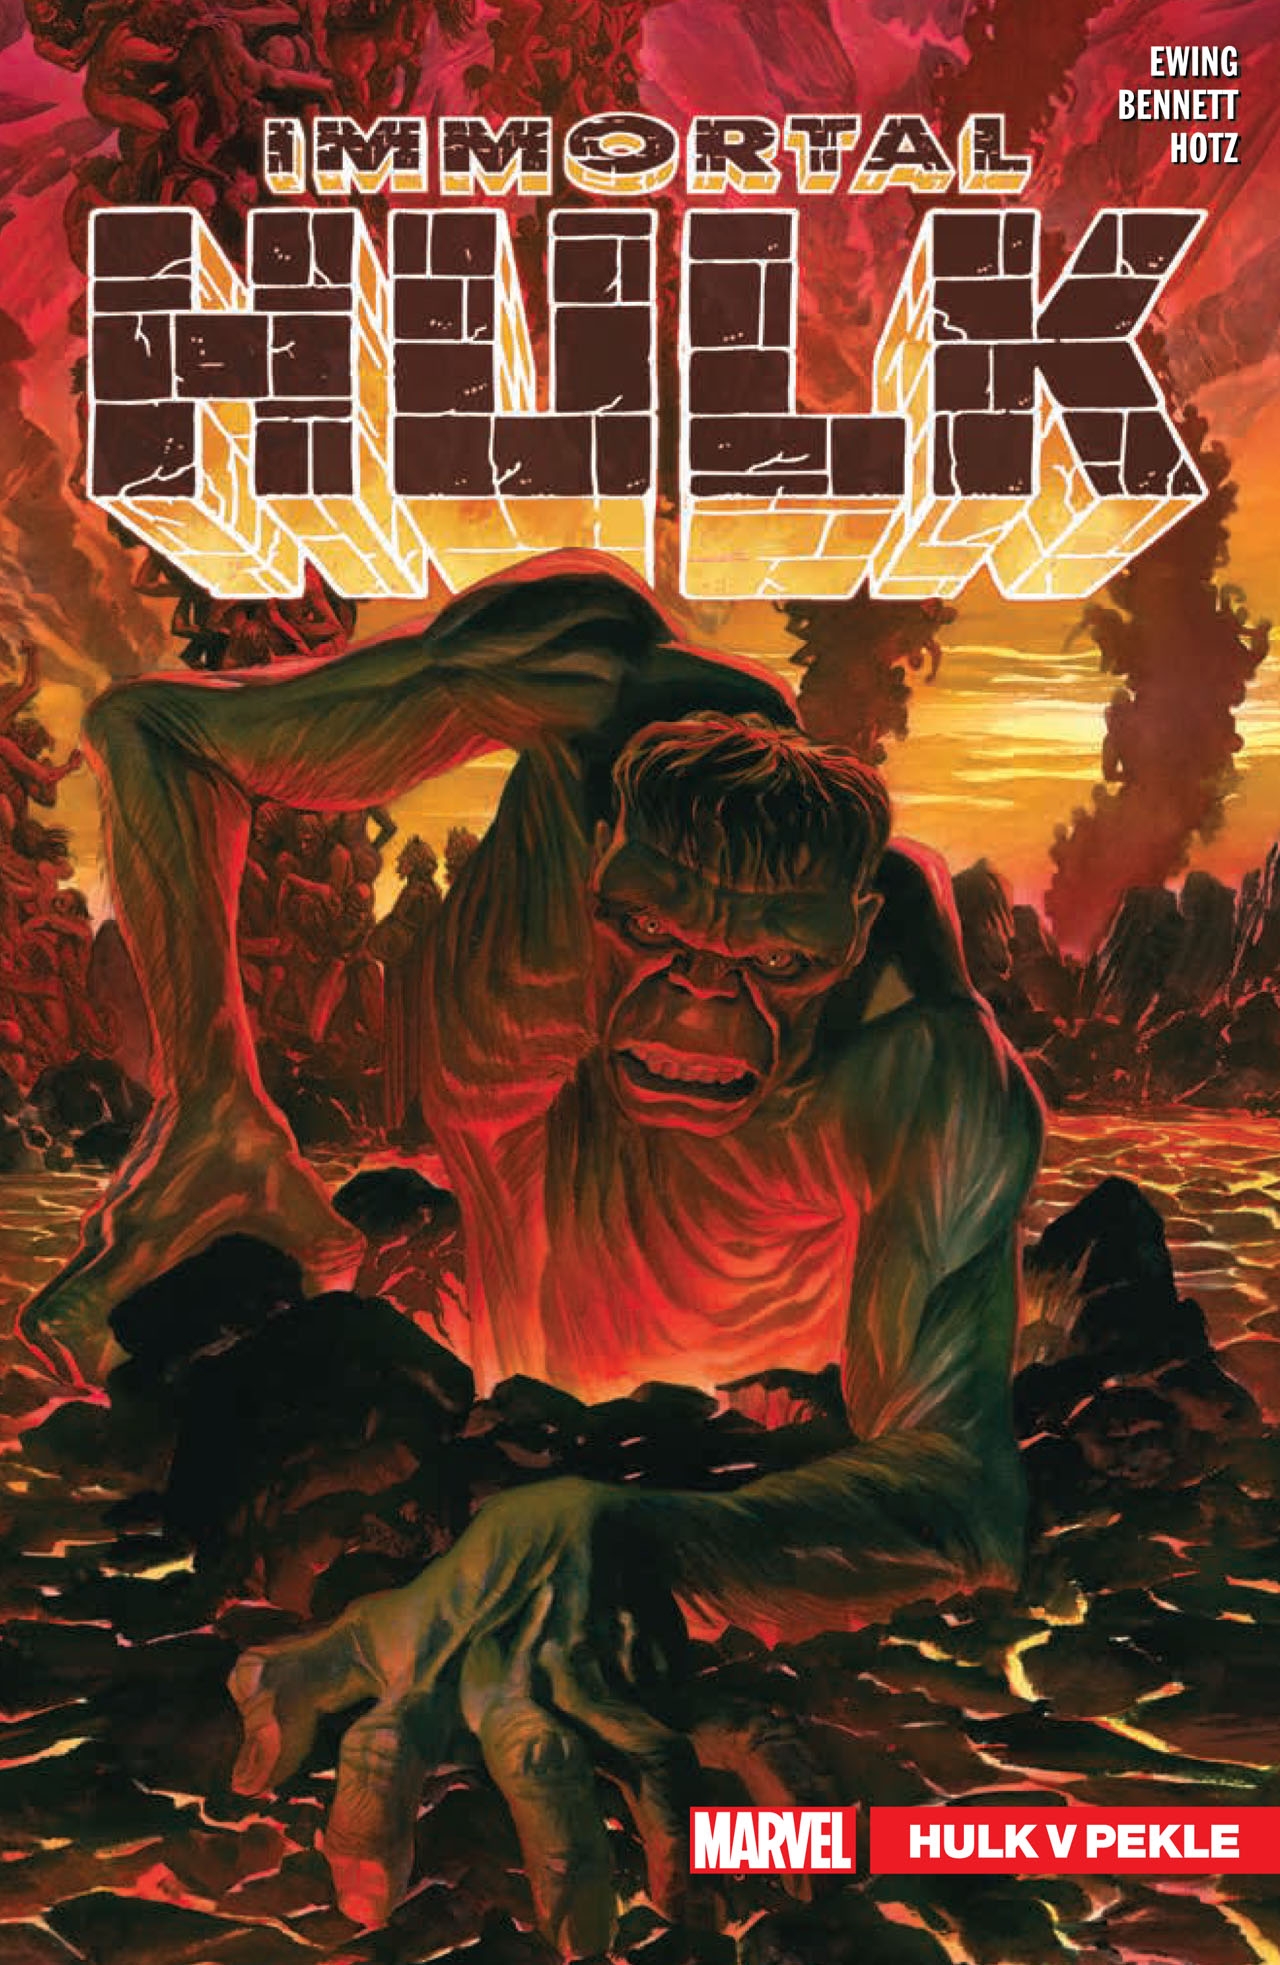 Ewing A.,různí - Immortal Hulk 3: Hulk v pekle